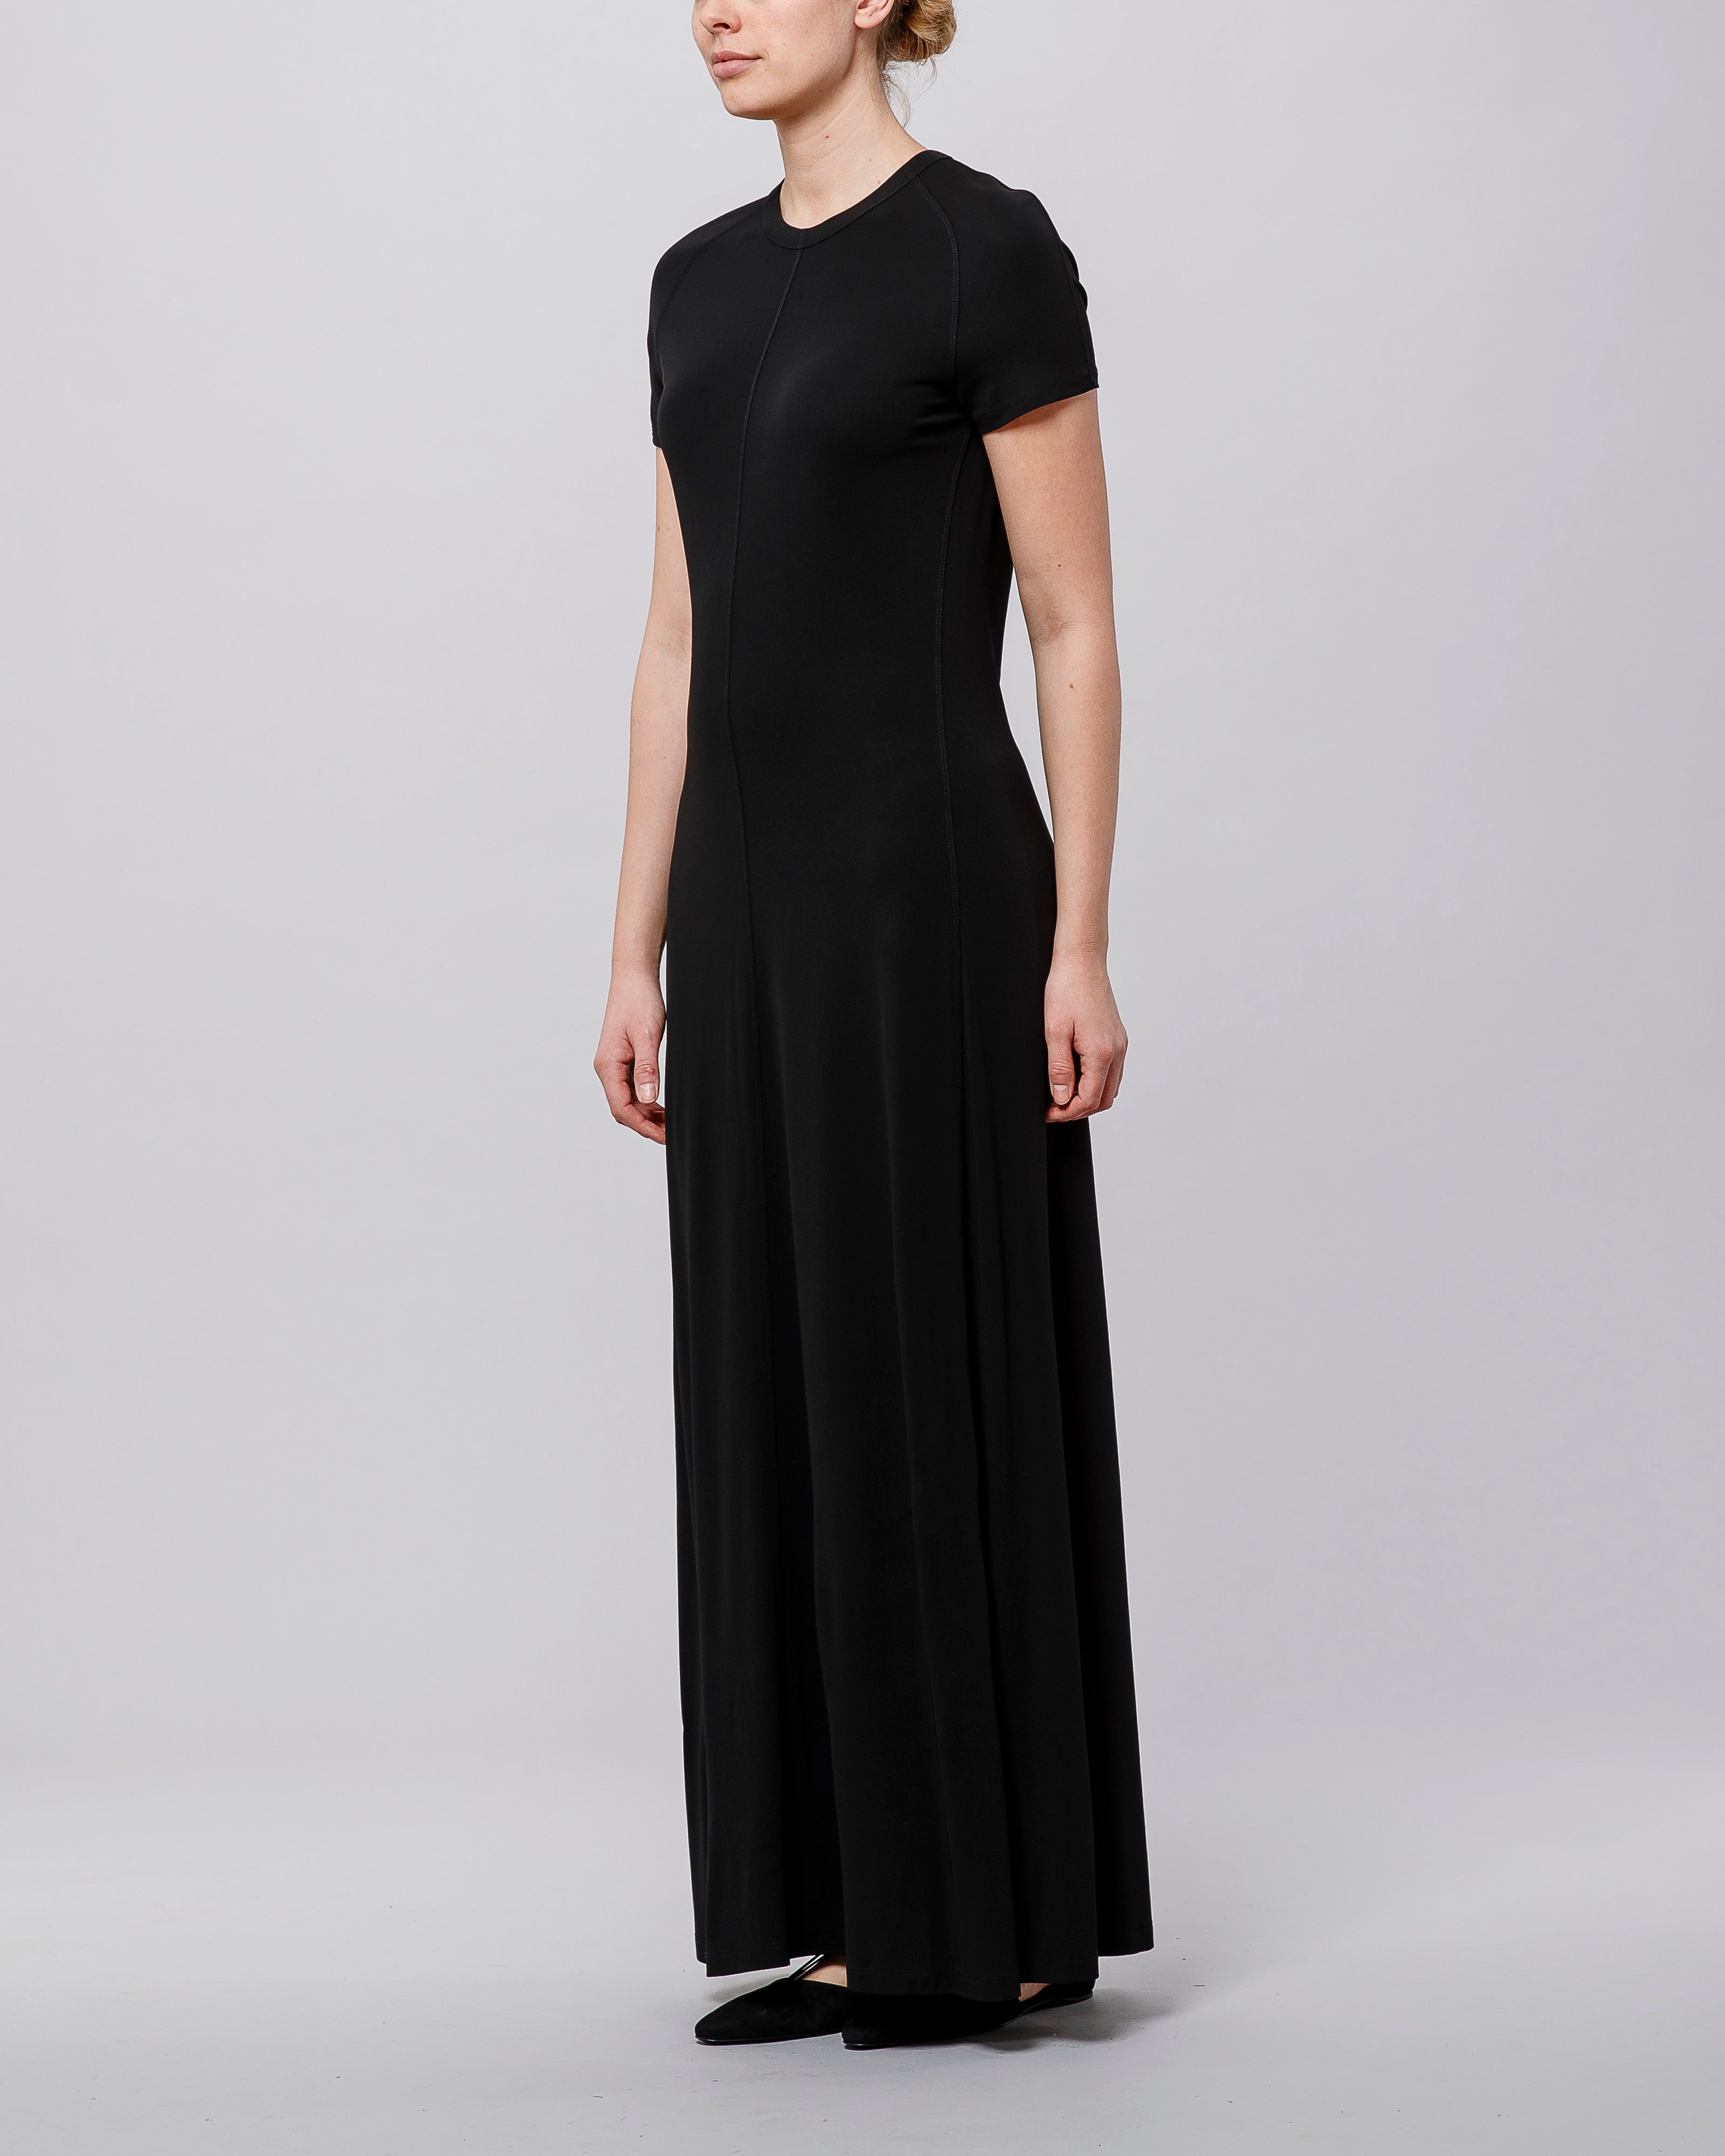 Toteme Black Fluid Jersey Dress